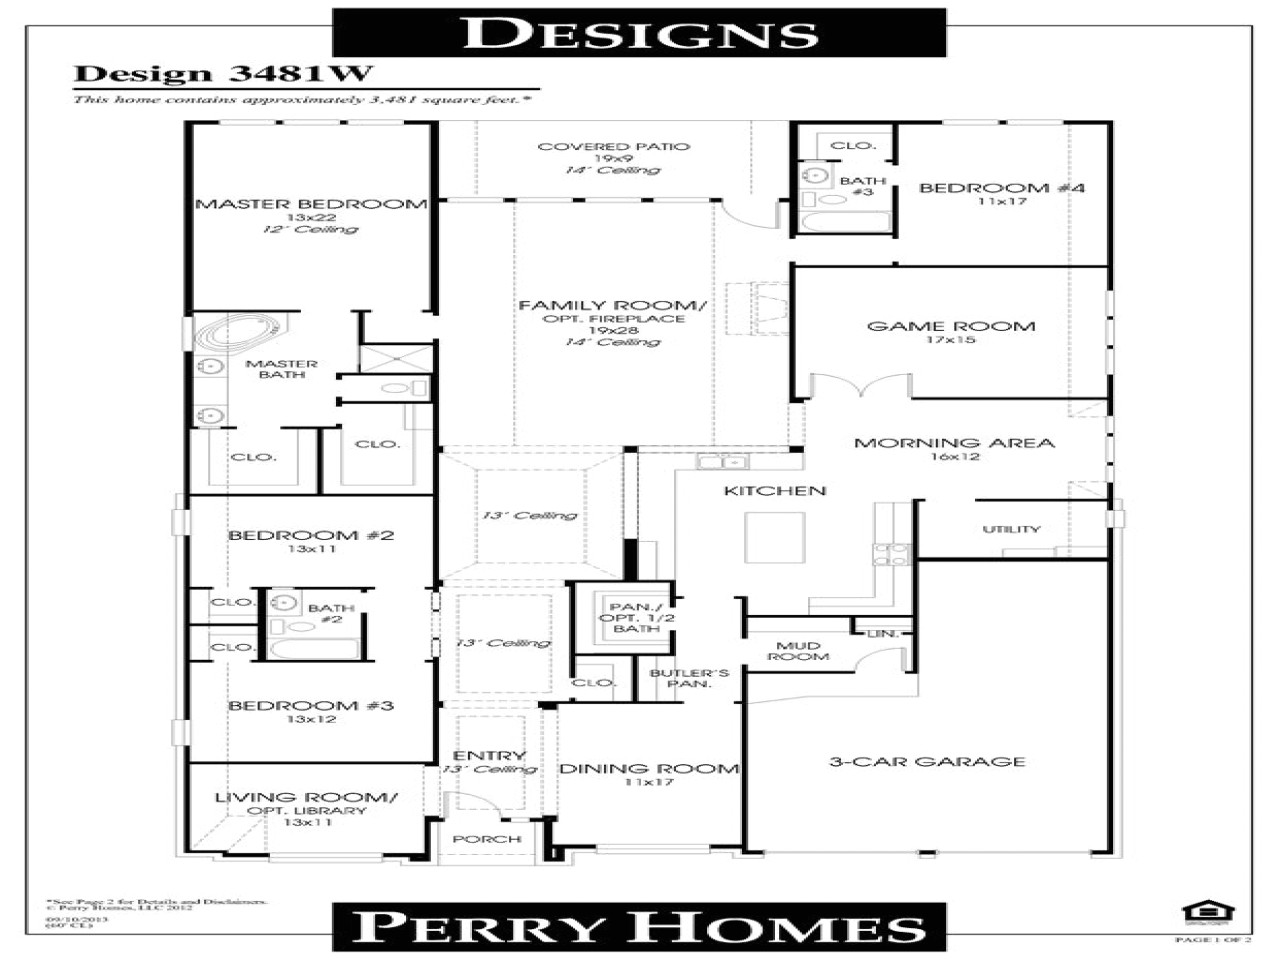 Perry Homes Floor Plans Open Floor Plans Small Home Perry Homes Floor Plans Dream